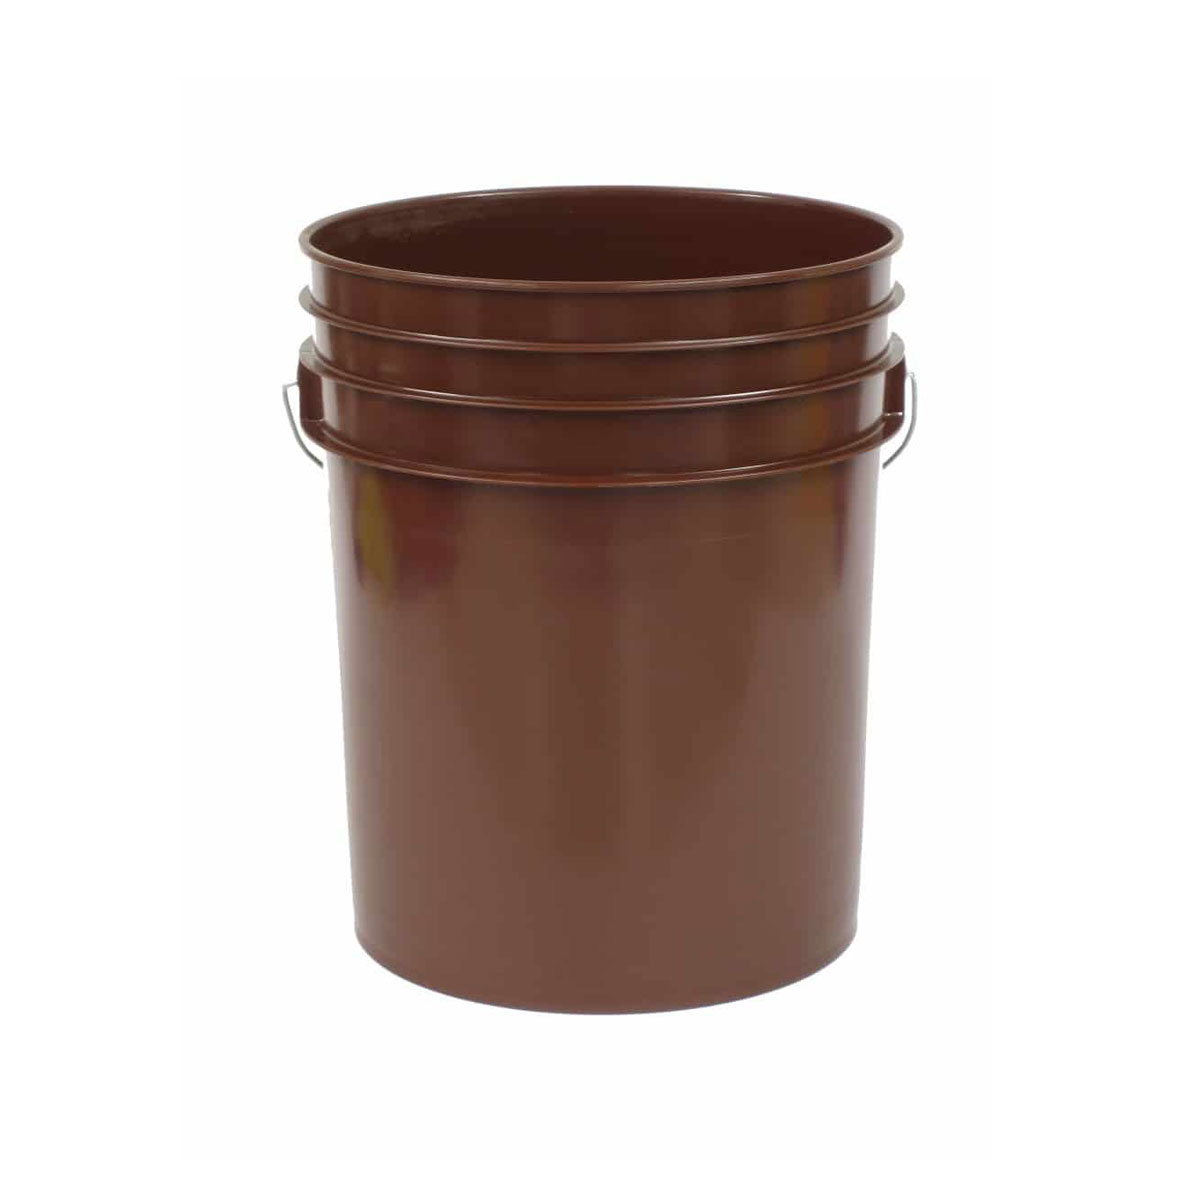 2.5 Gallon Plastic Bucket For Sale, Promotional Plastic Bucket